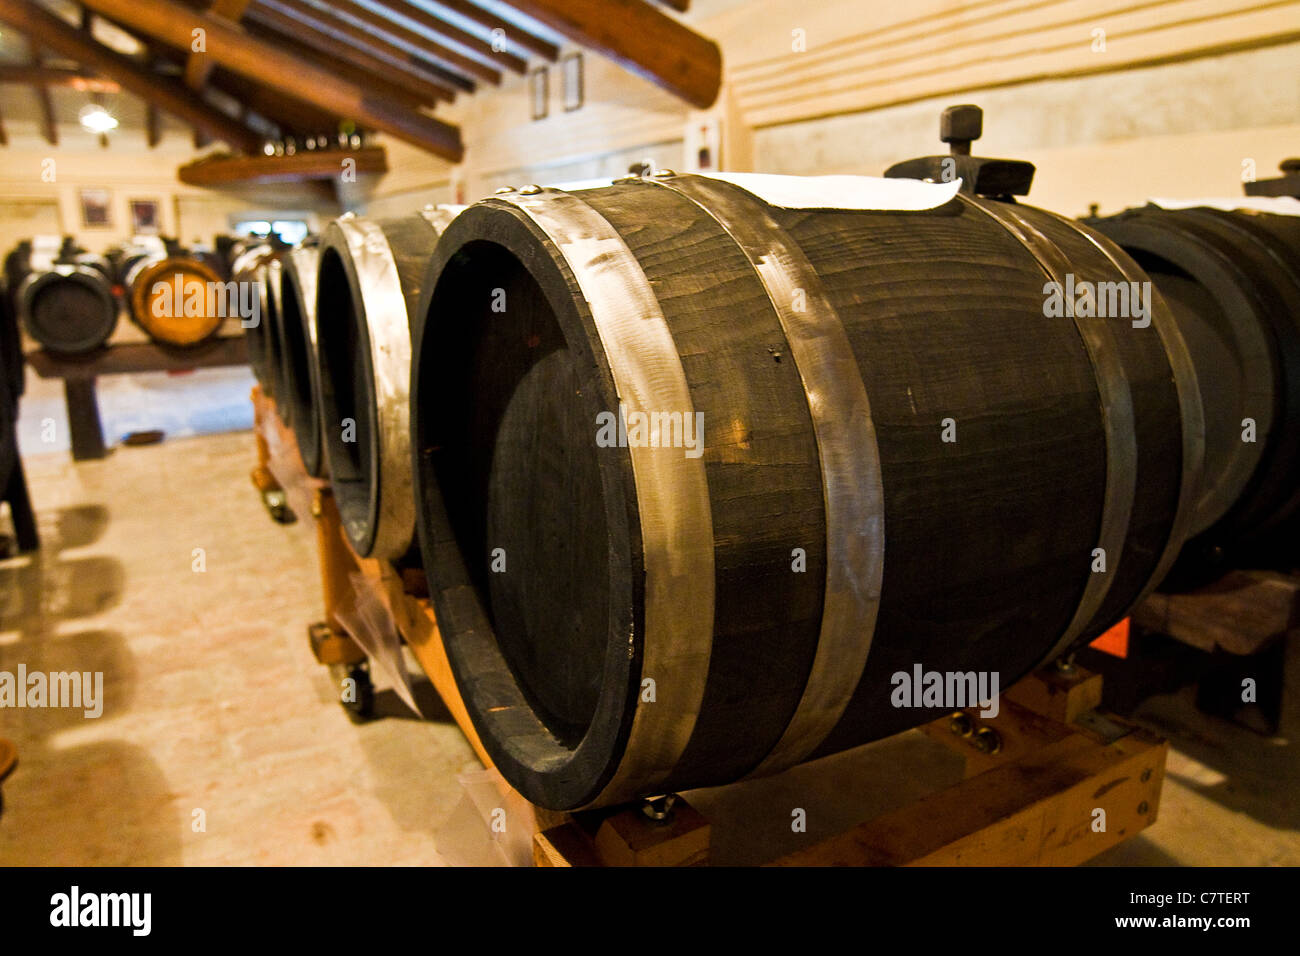 Italy, Emilia Romagna, Modena, balsamic vinegar ageing in barrels Stock Photo